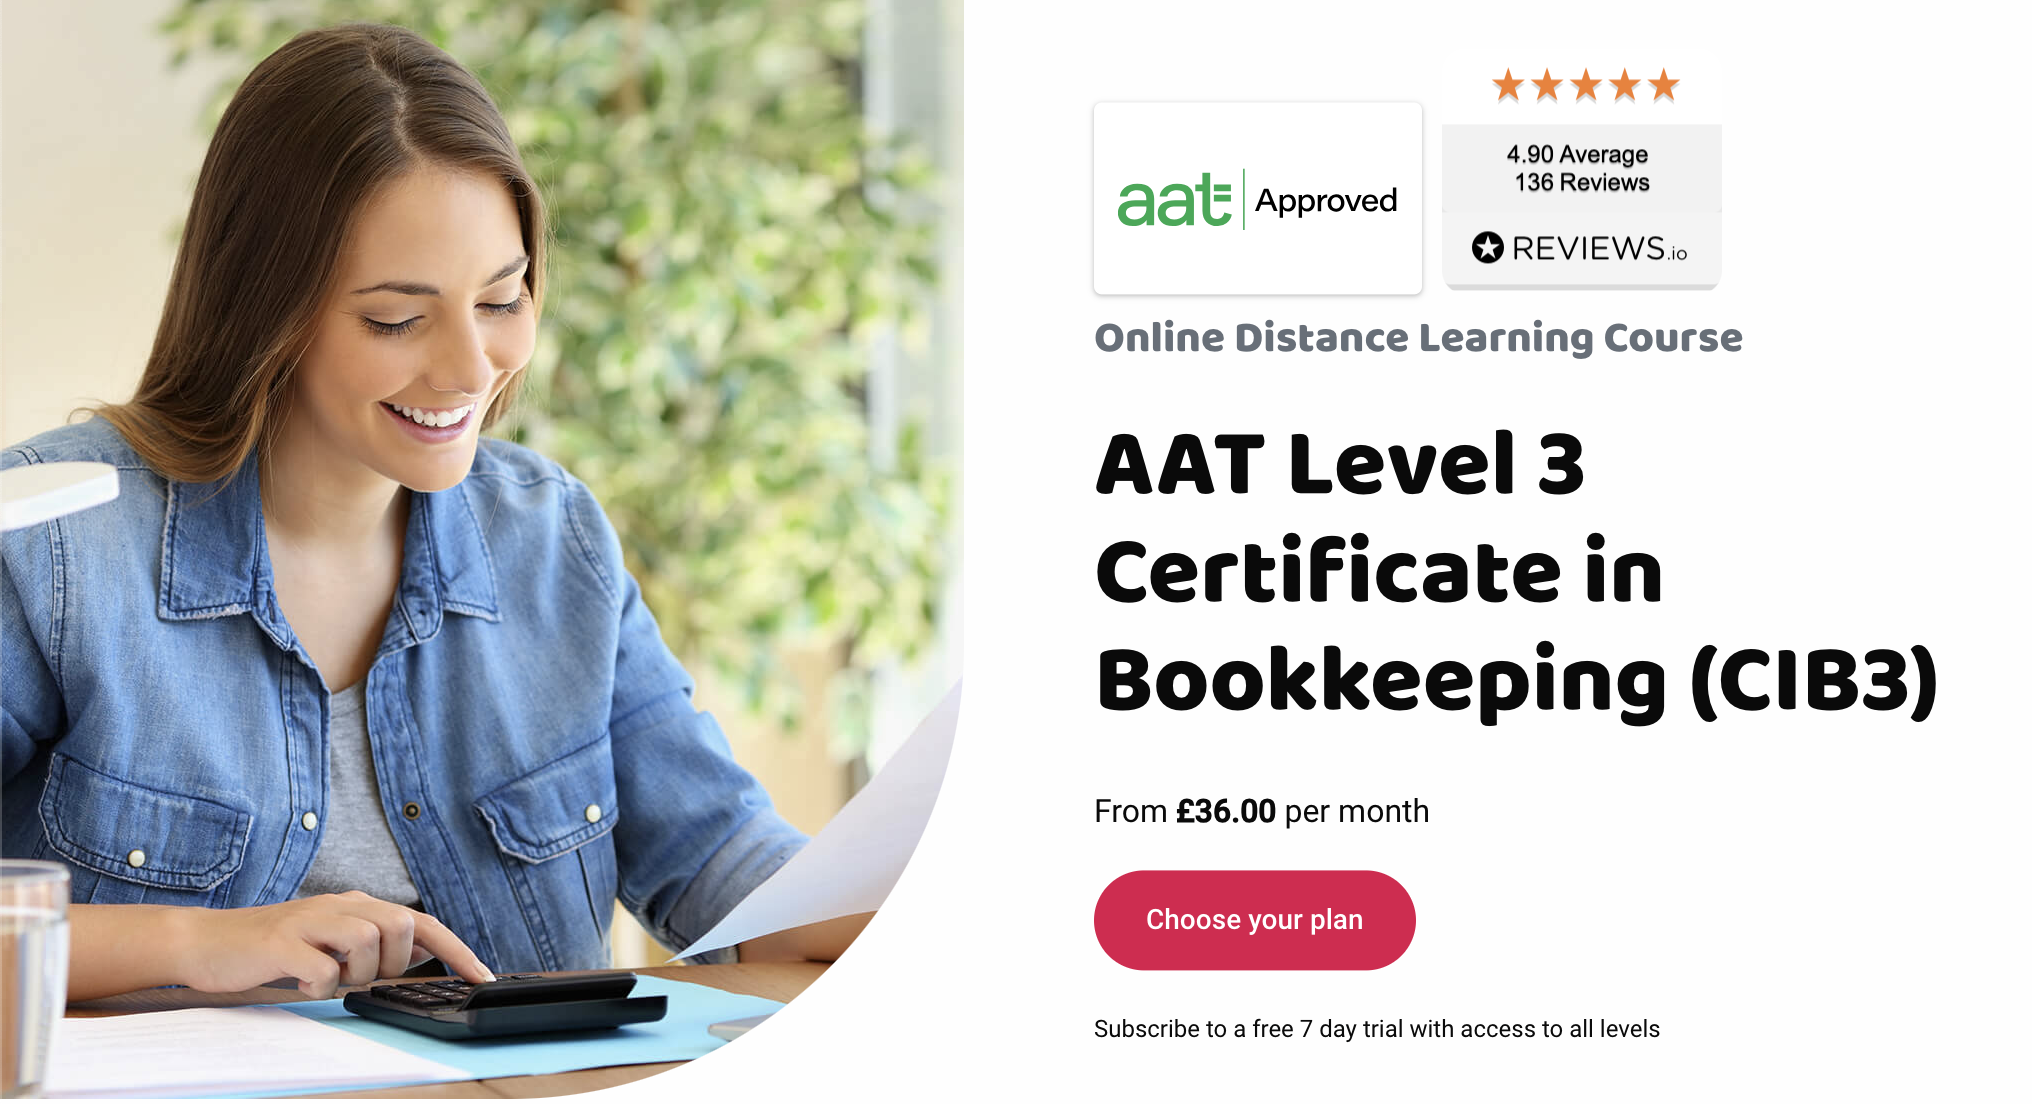 AAT Level 3 Certificate in Bookkeeping (CIB3)